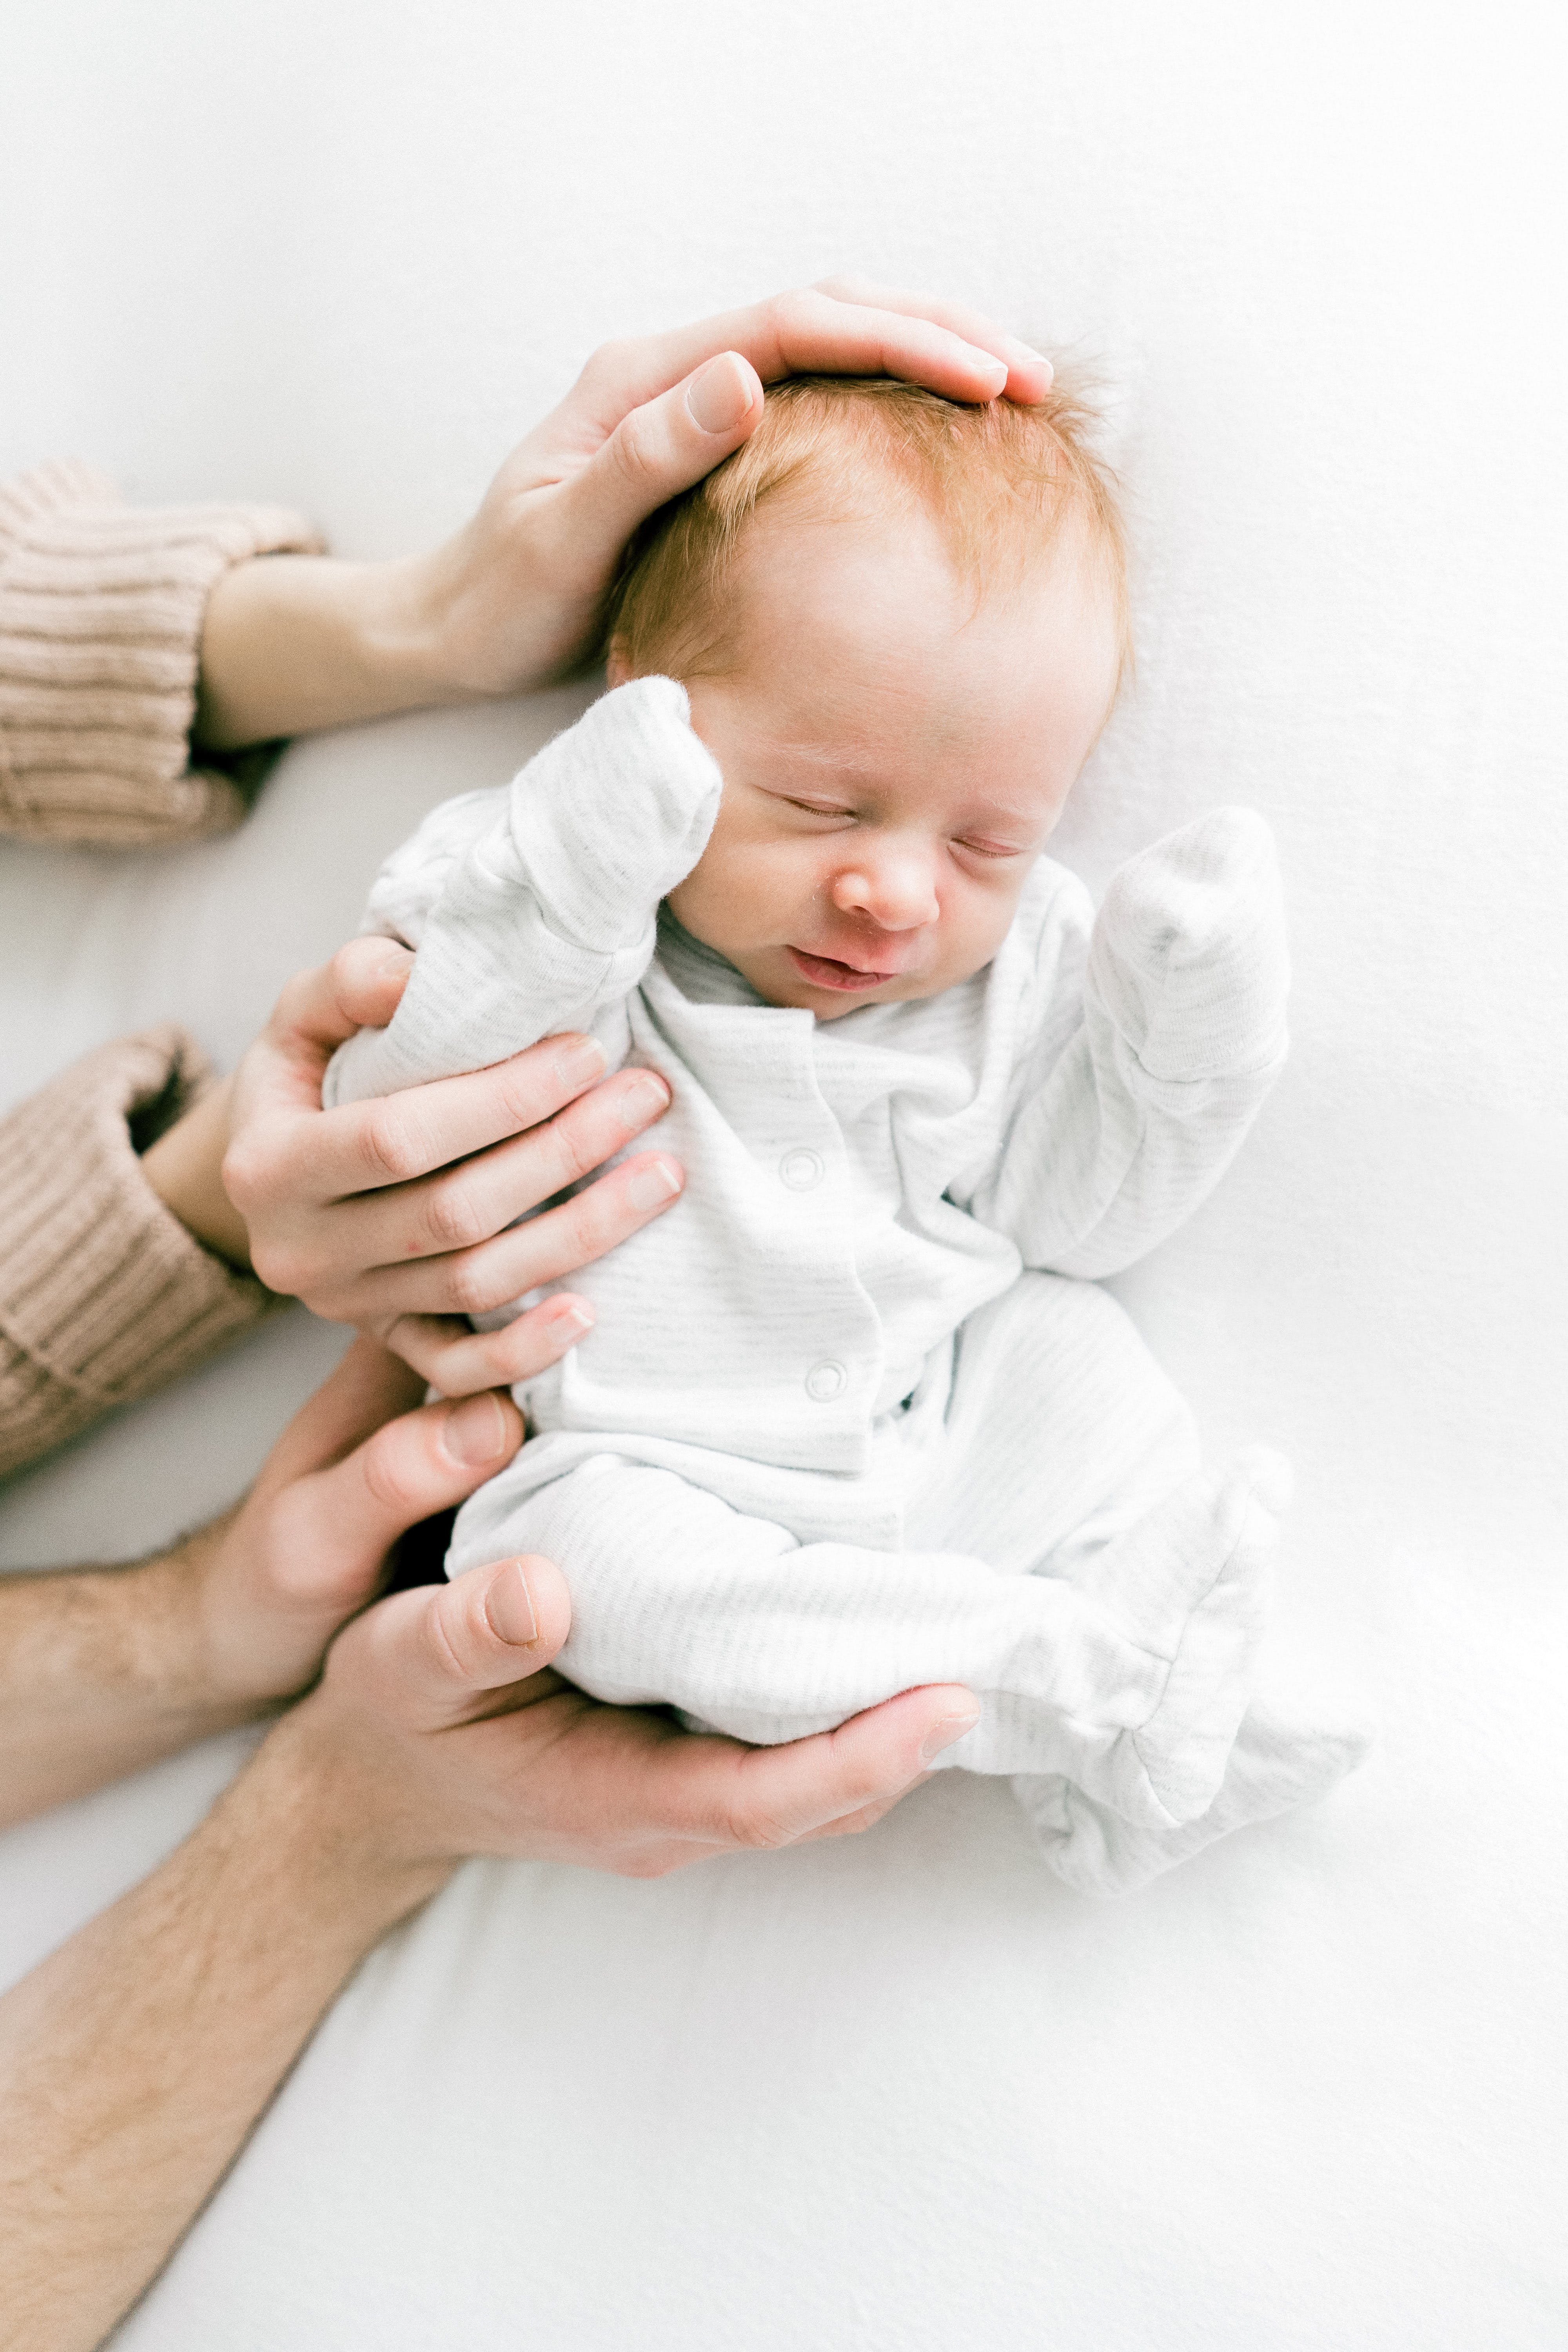 Mains tenant un petit bébé | Source : Pexels